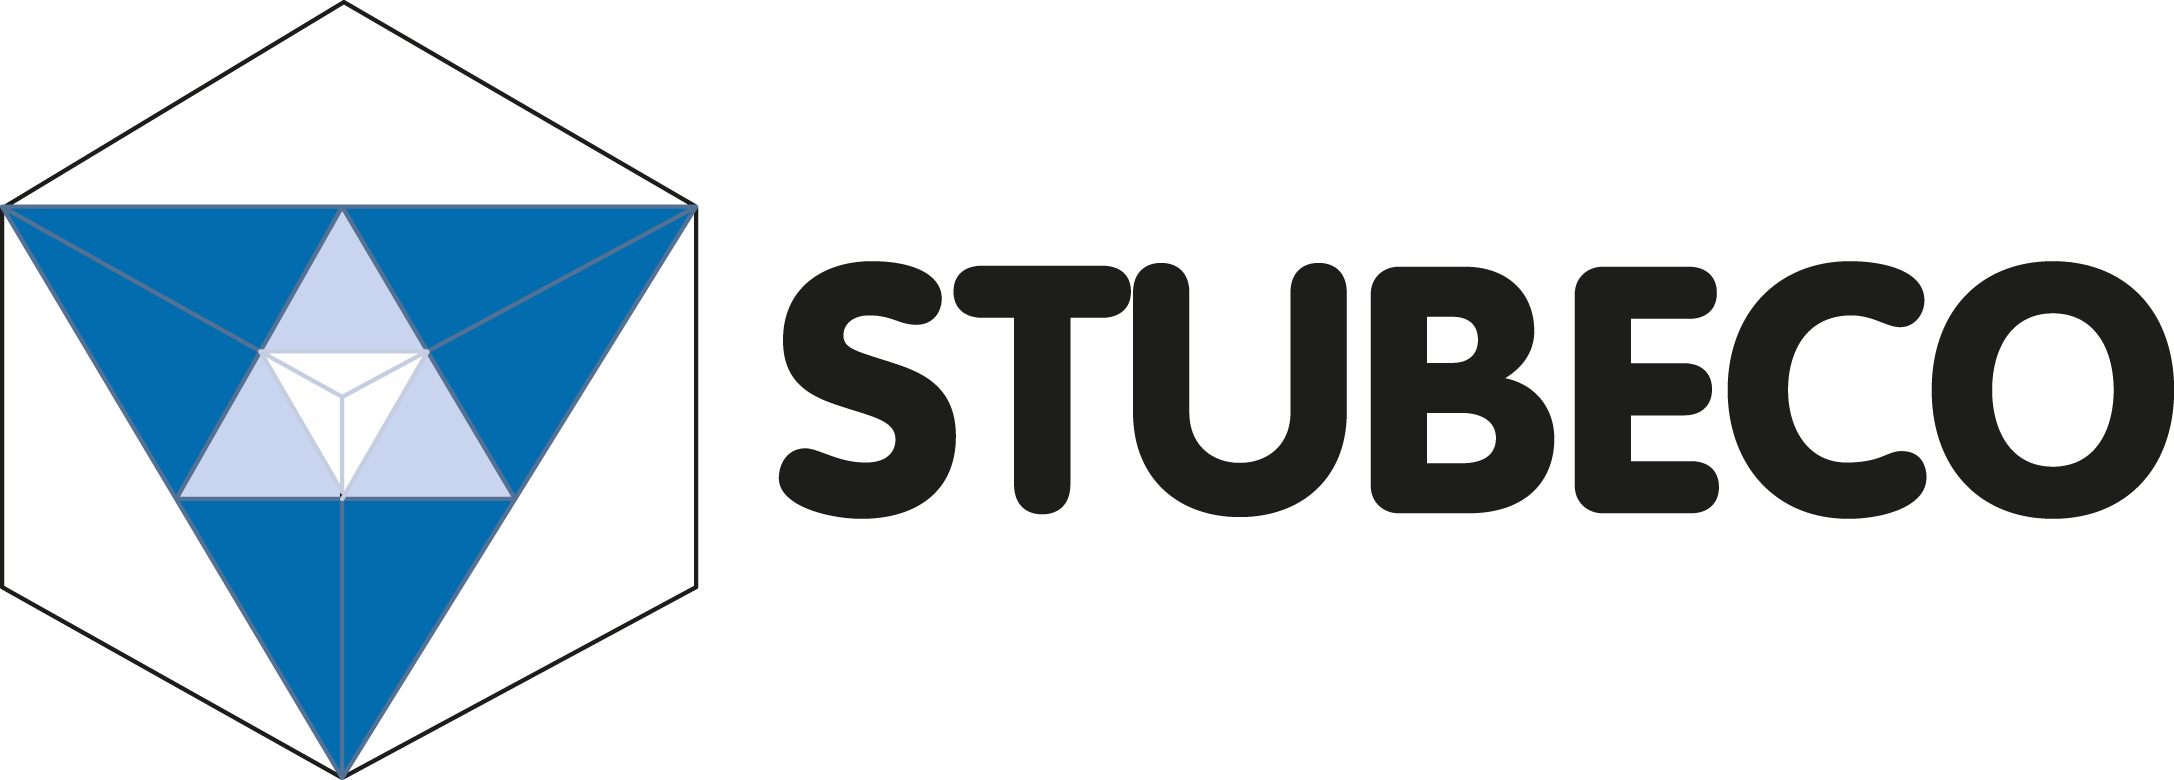 Stubeco logo